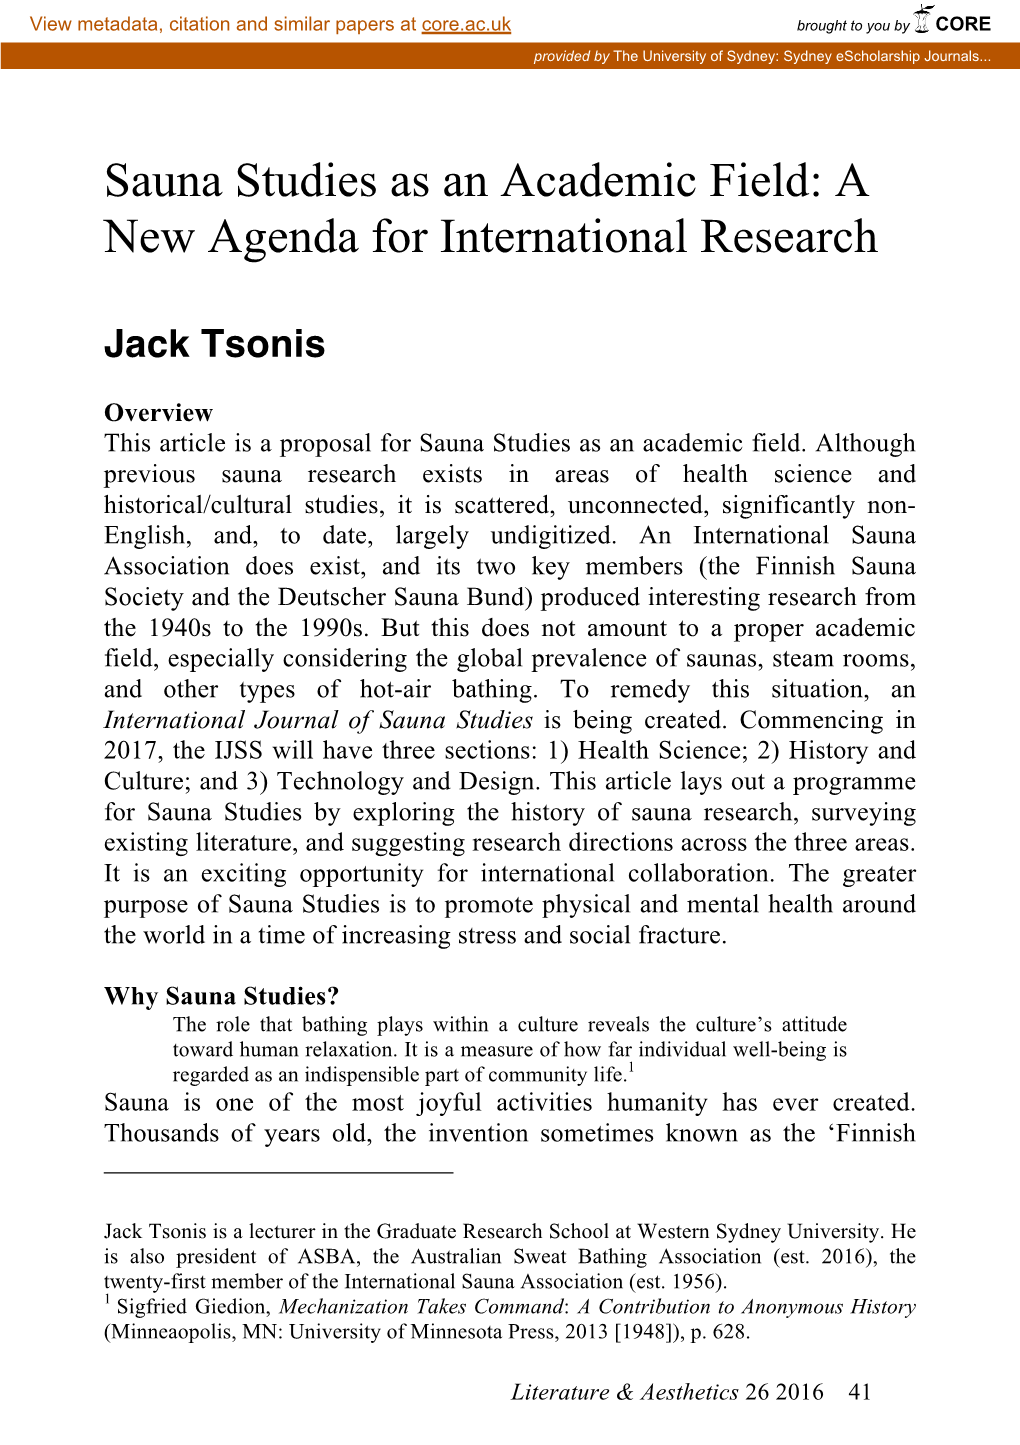 Sauna Studies As an Academic Field: a New Agenda for International Research